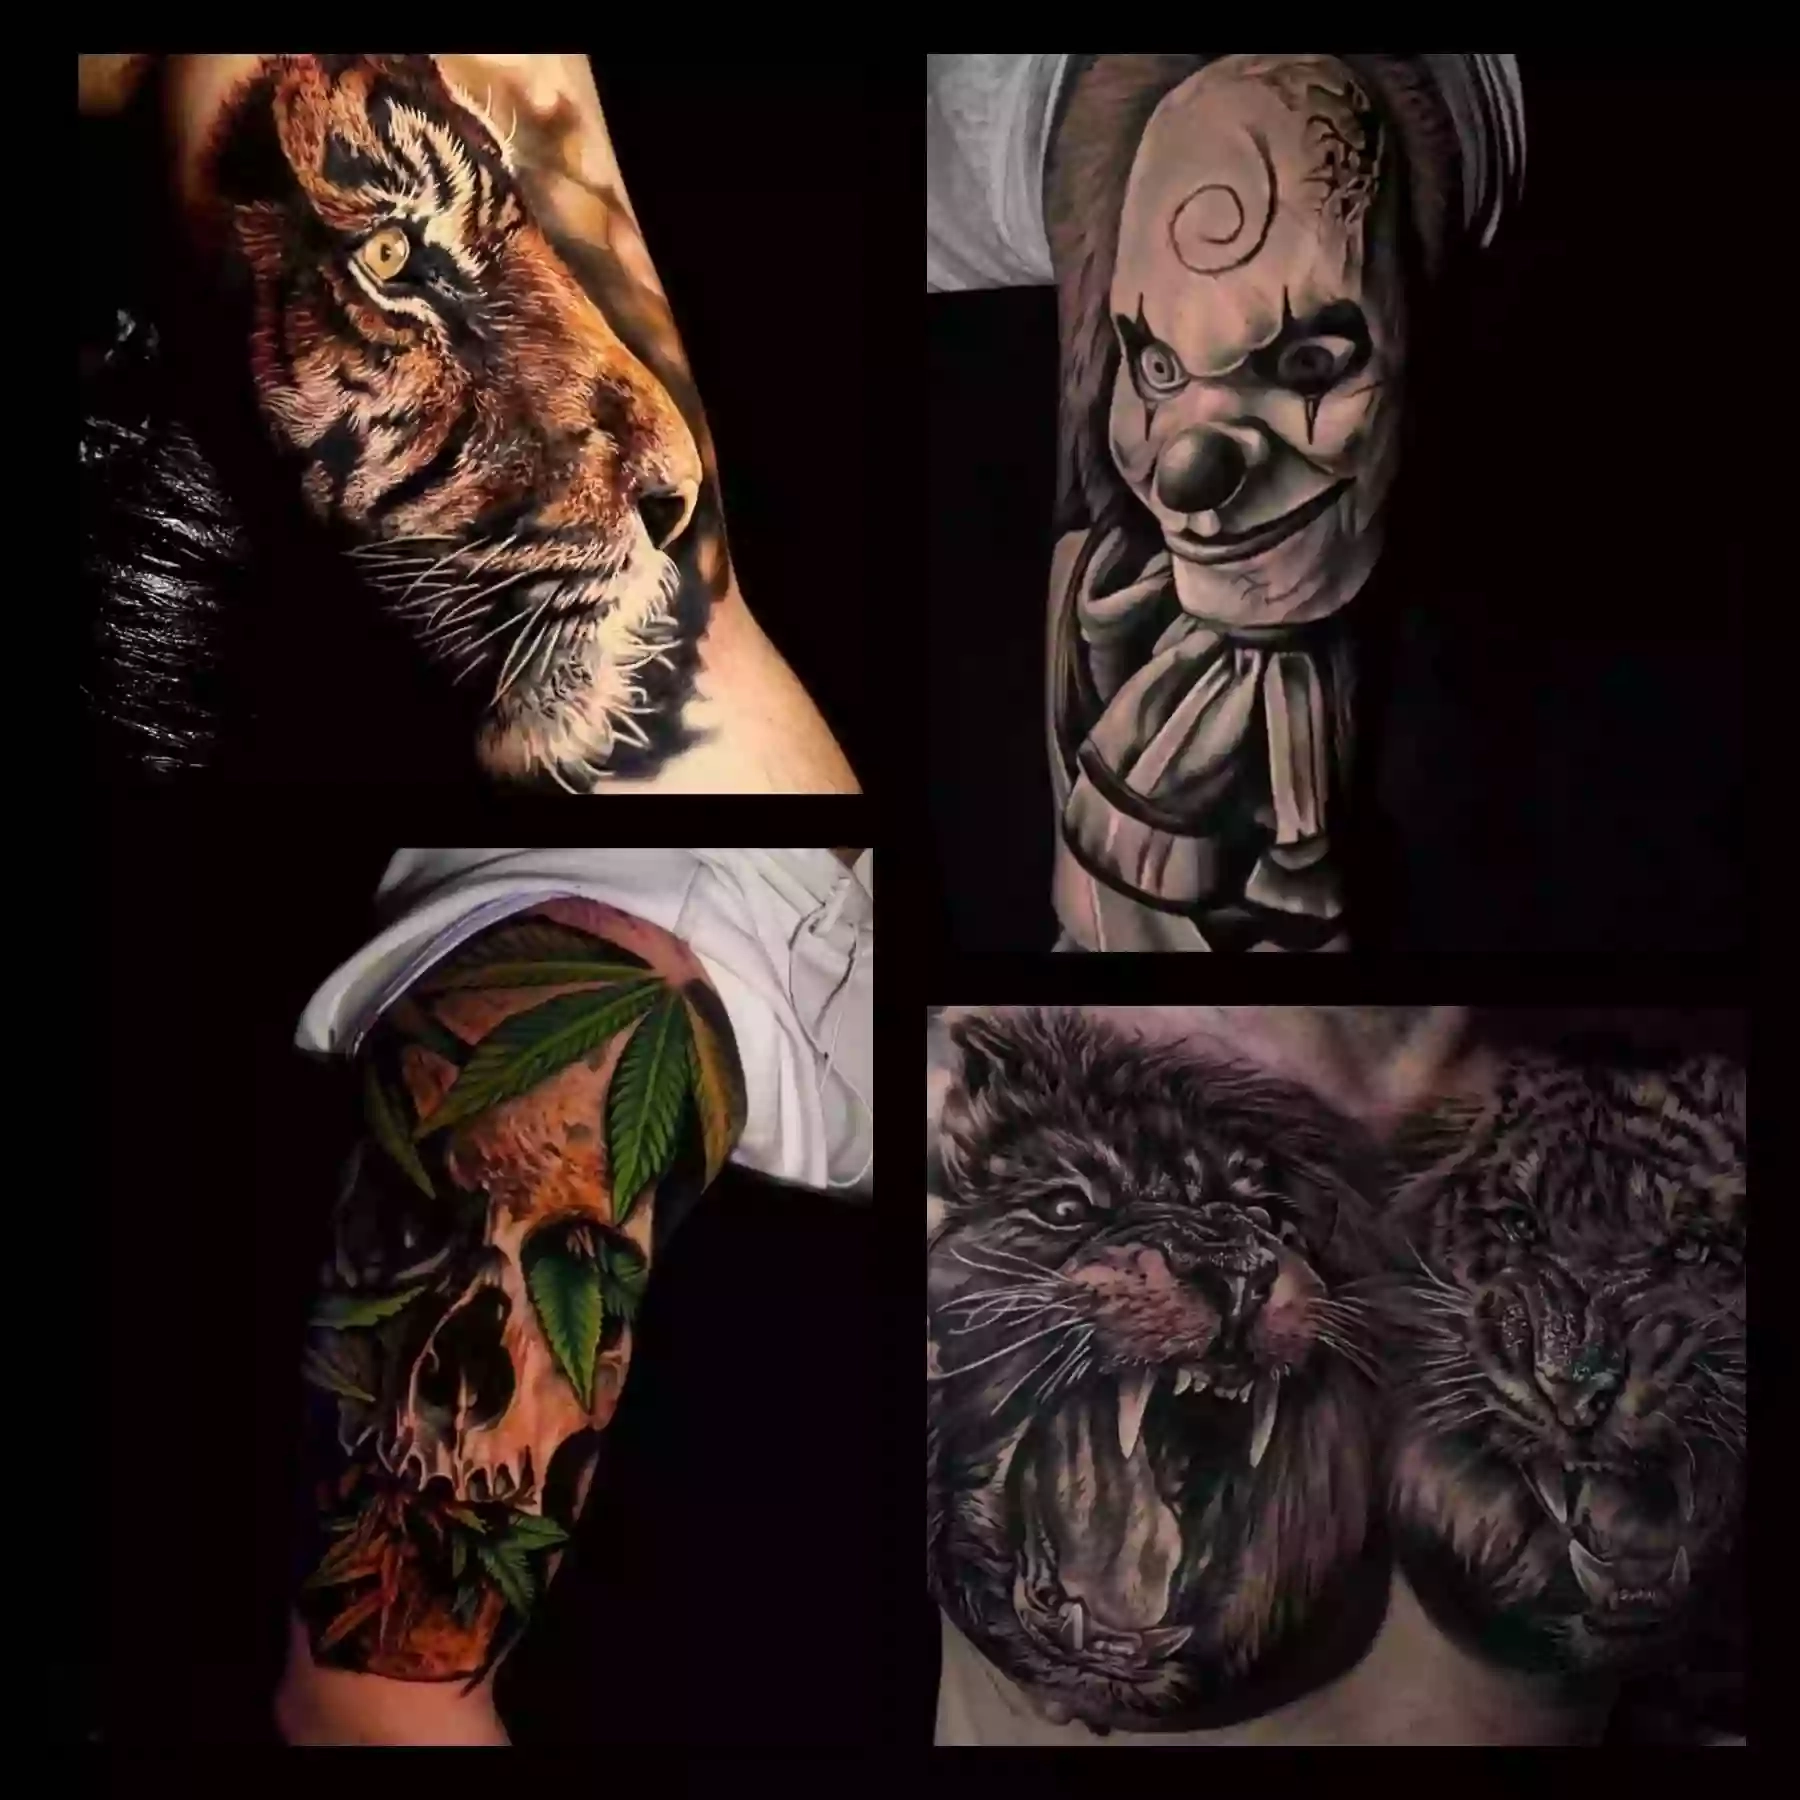 die for art tattoo studio manchester uk